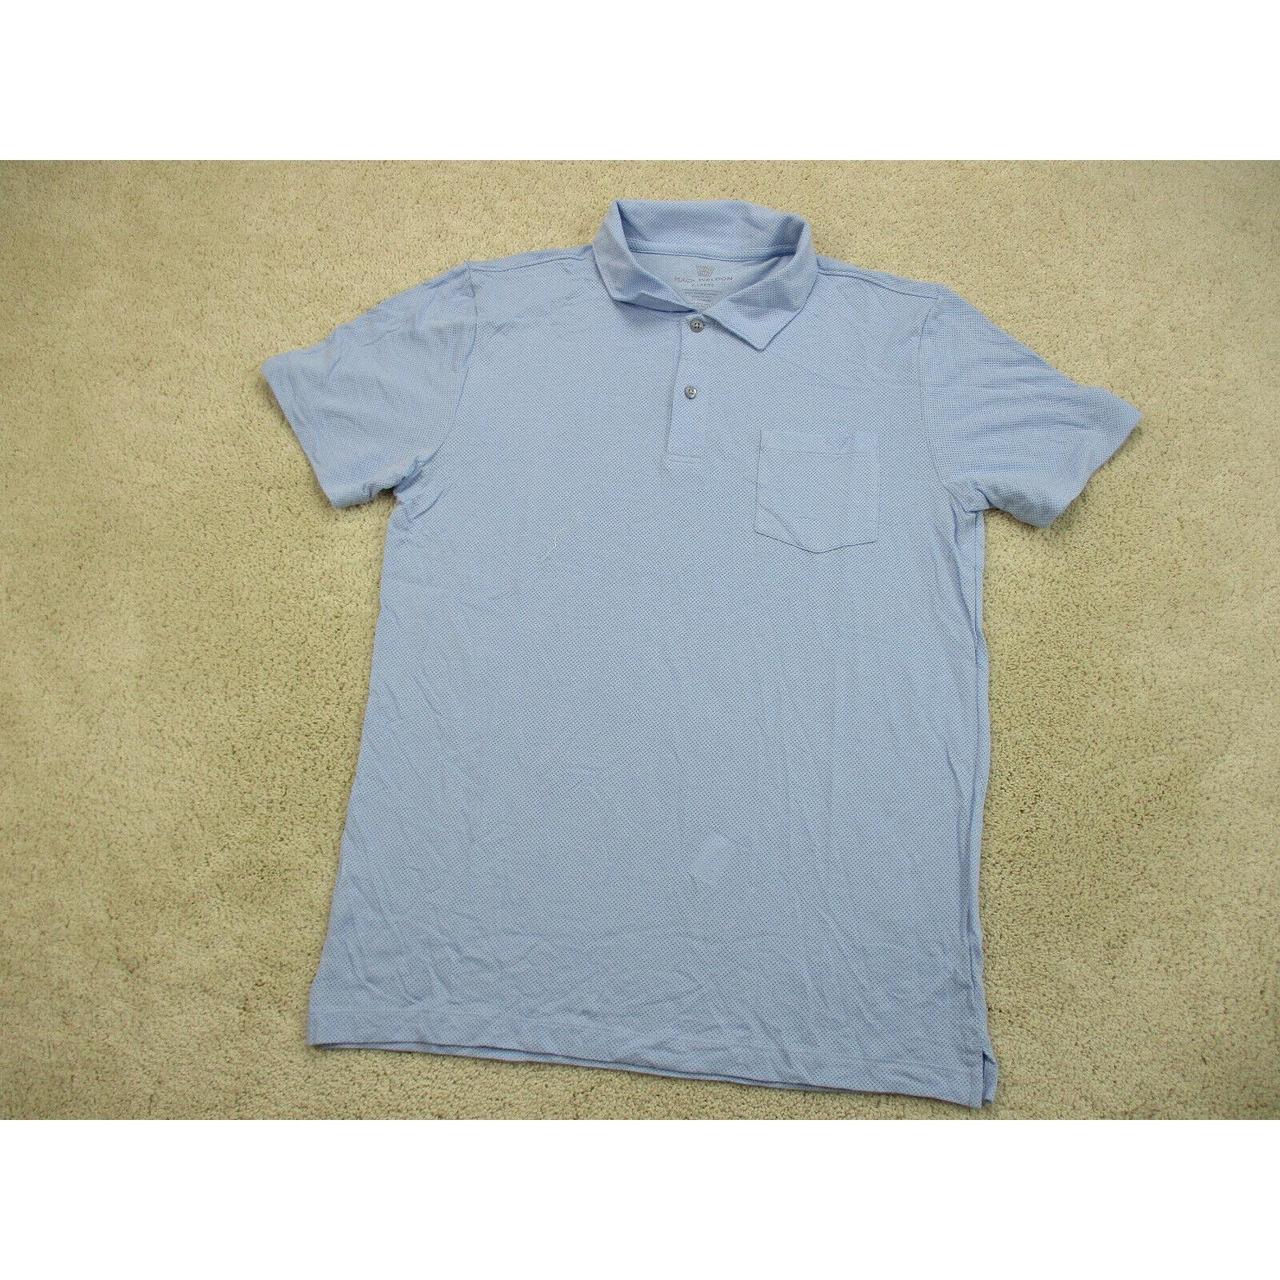 Product Image 2 - Mack Weldon Polo Shirt Adult